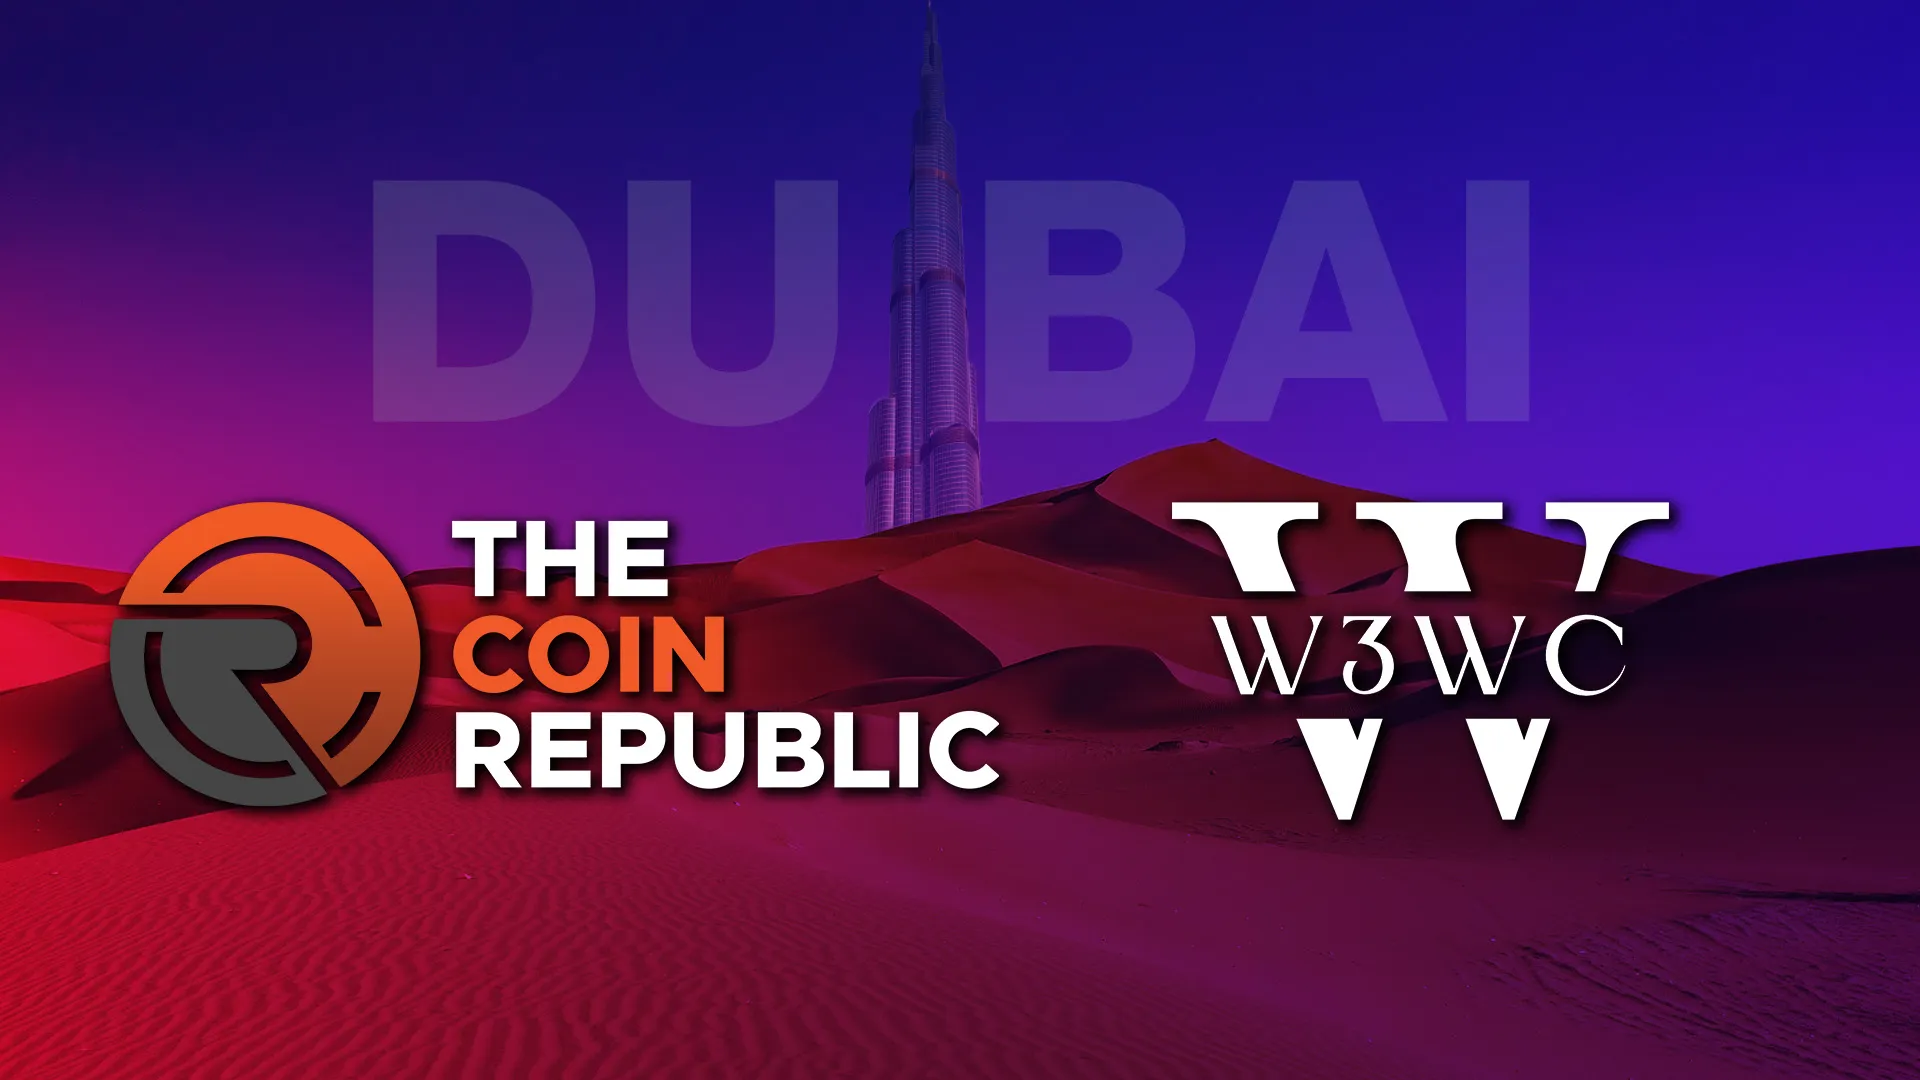 Dubai’s W3WC Event: Where Web3 Visionaries Converge and Triumph